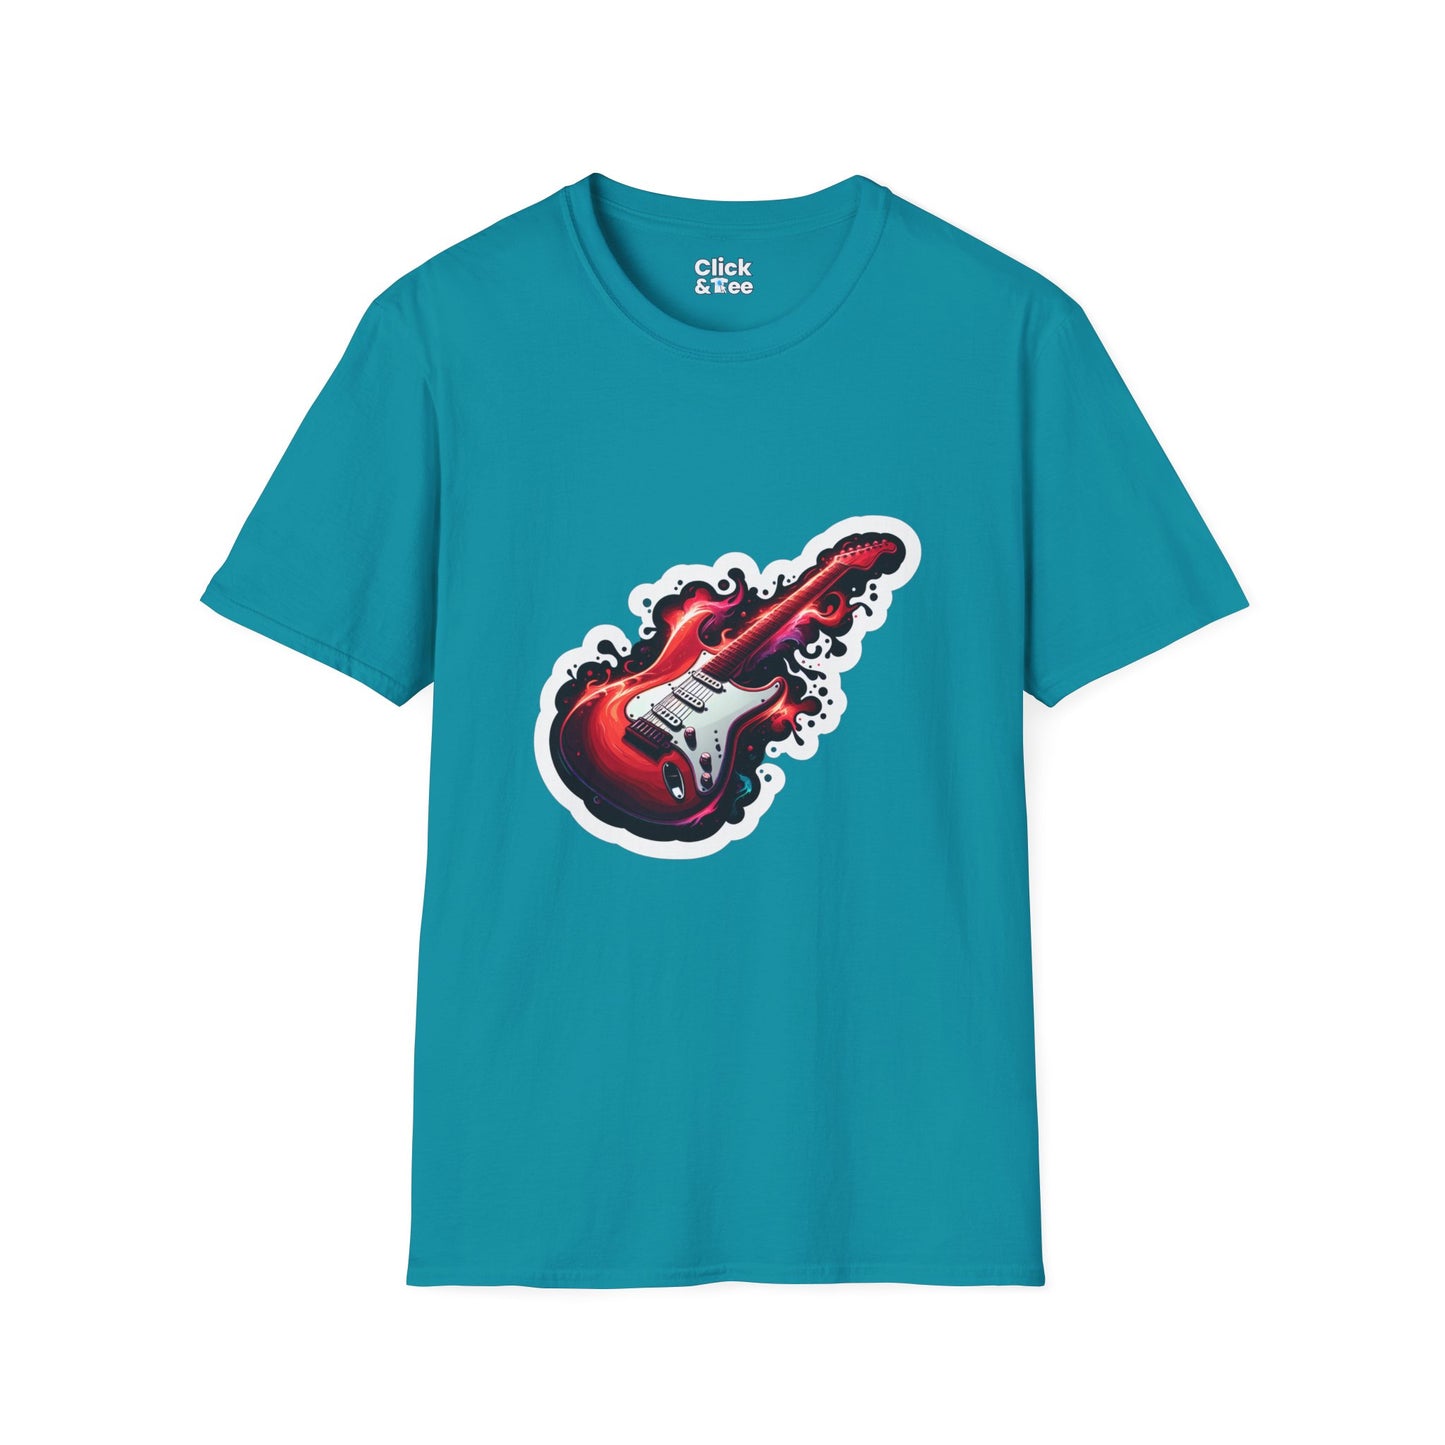 Color Splatter T-Shirt - Red  Legendary Guitar Glowing - Color Splatter Style T-Shirt